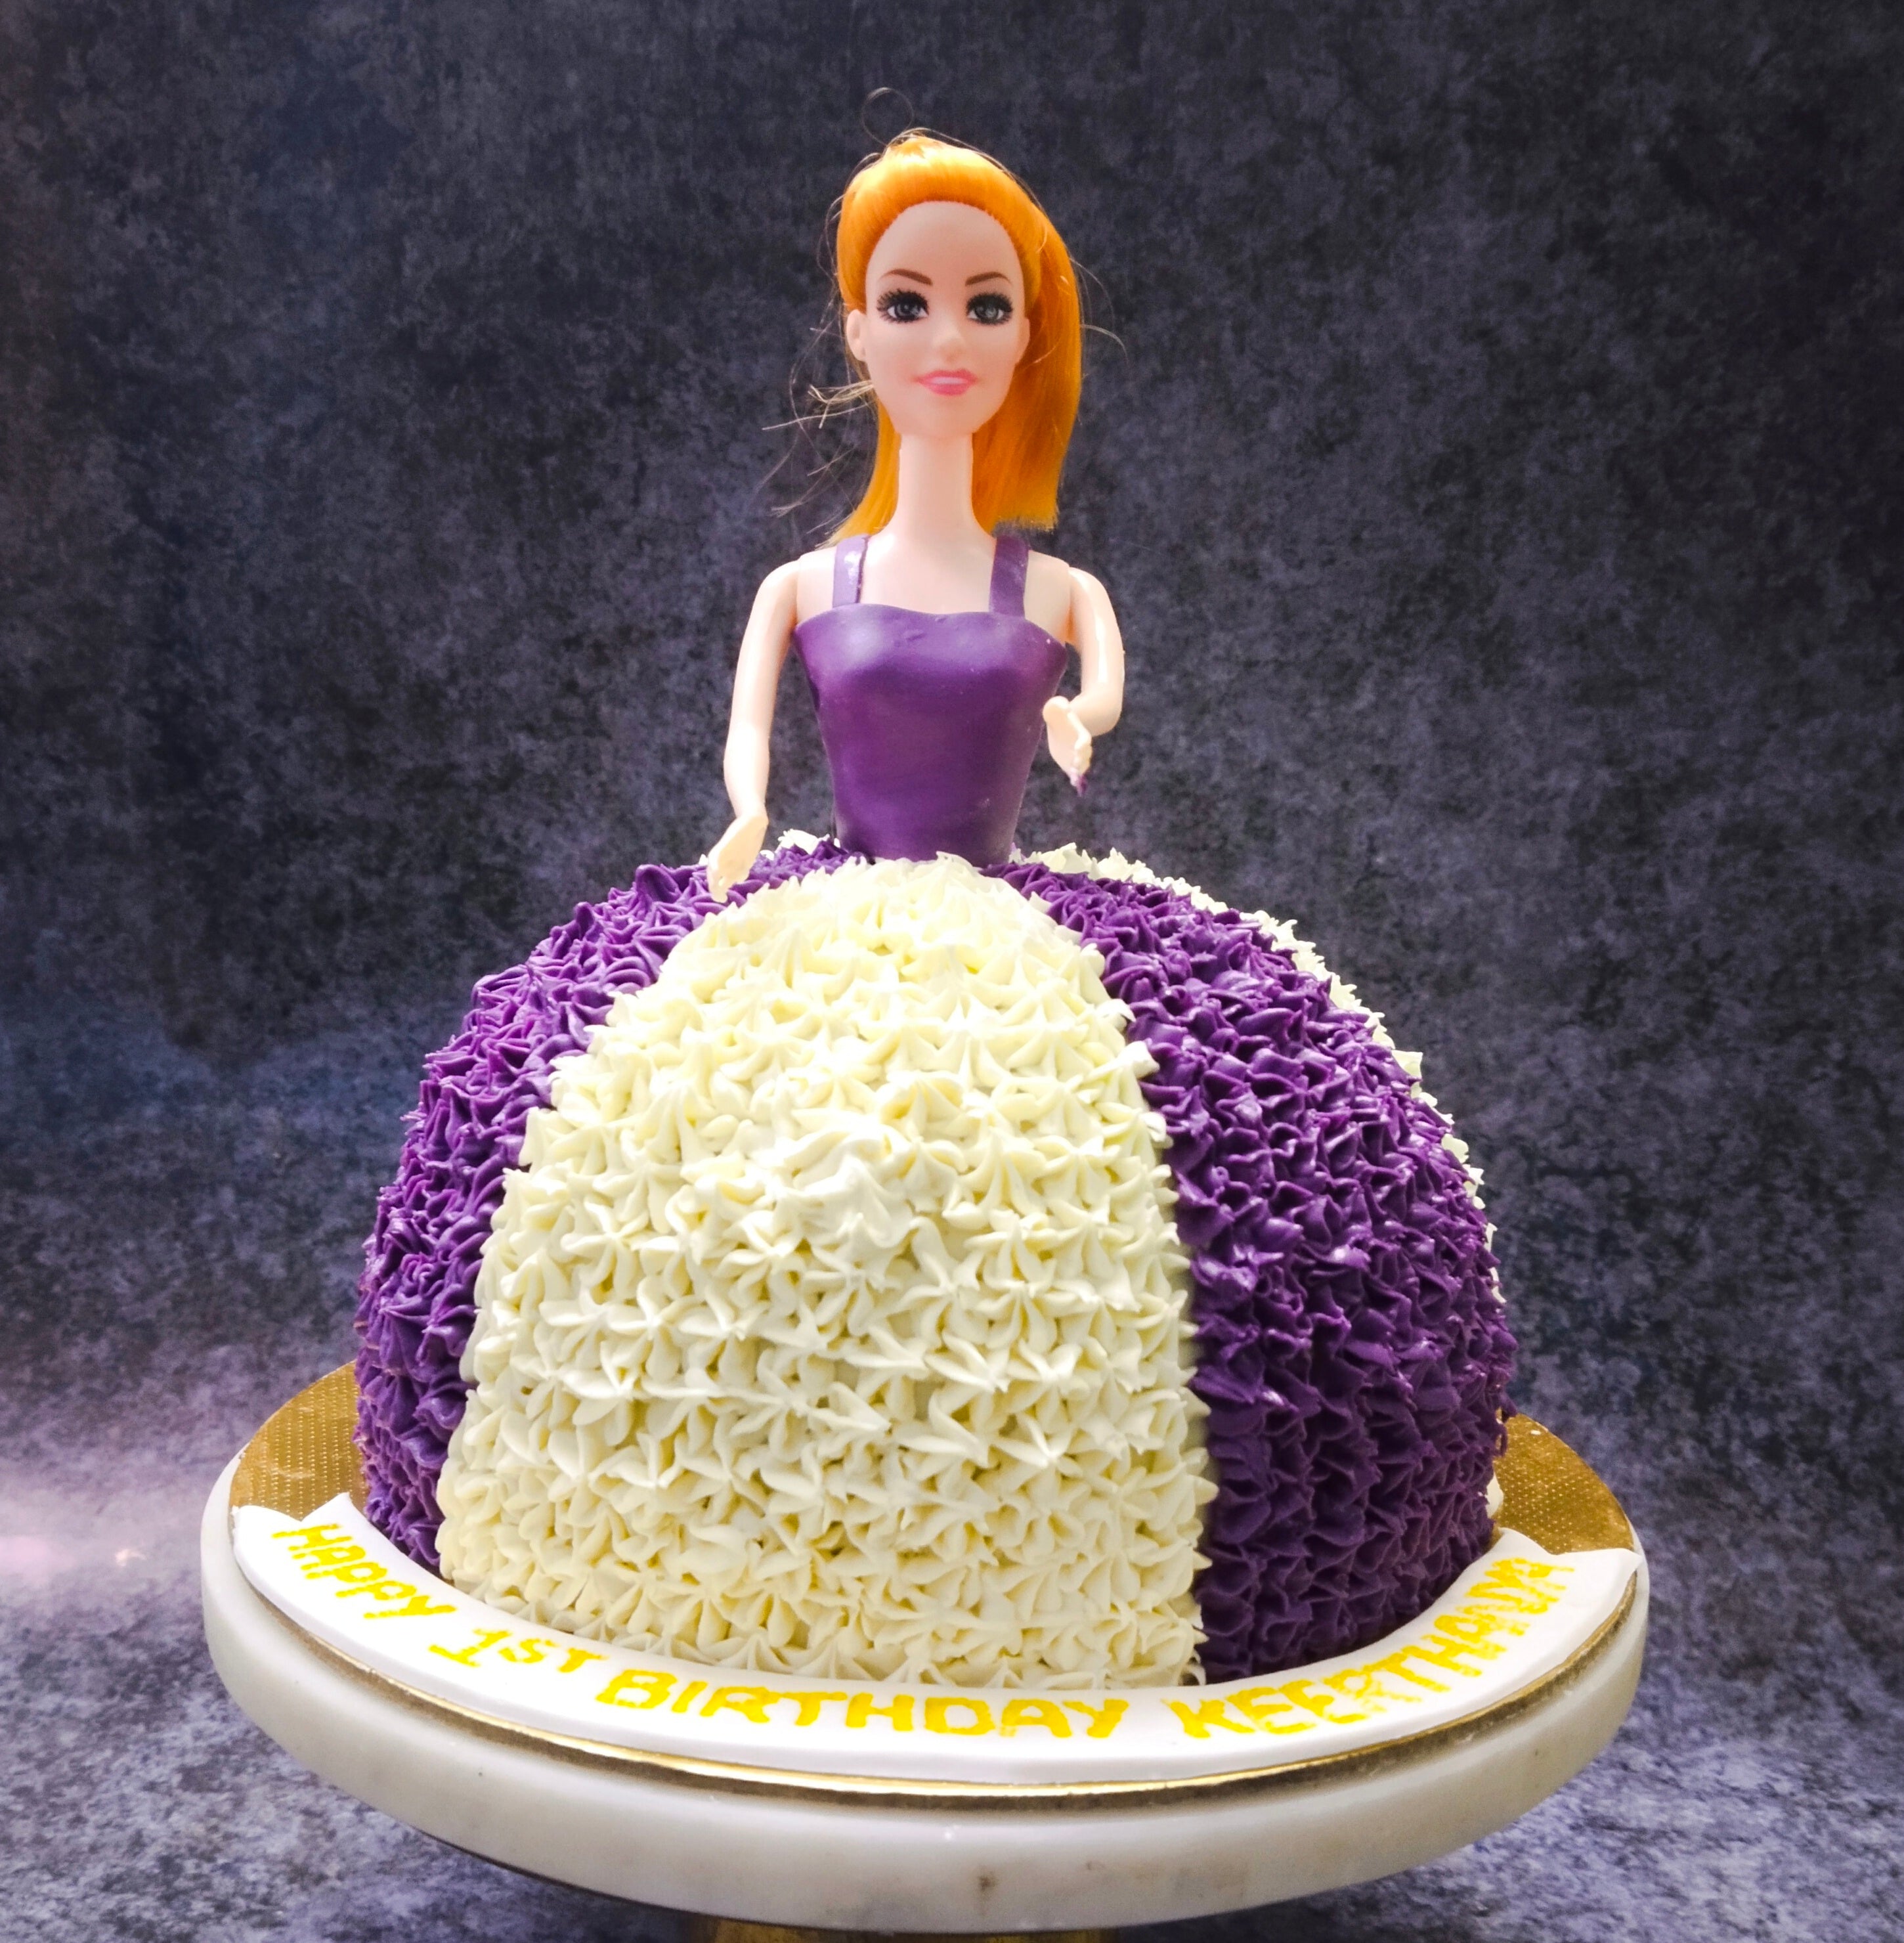 Barbie doll cake - Decorated Cake by Bianca - CakesDecor